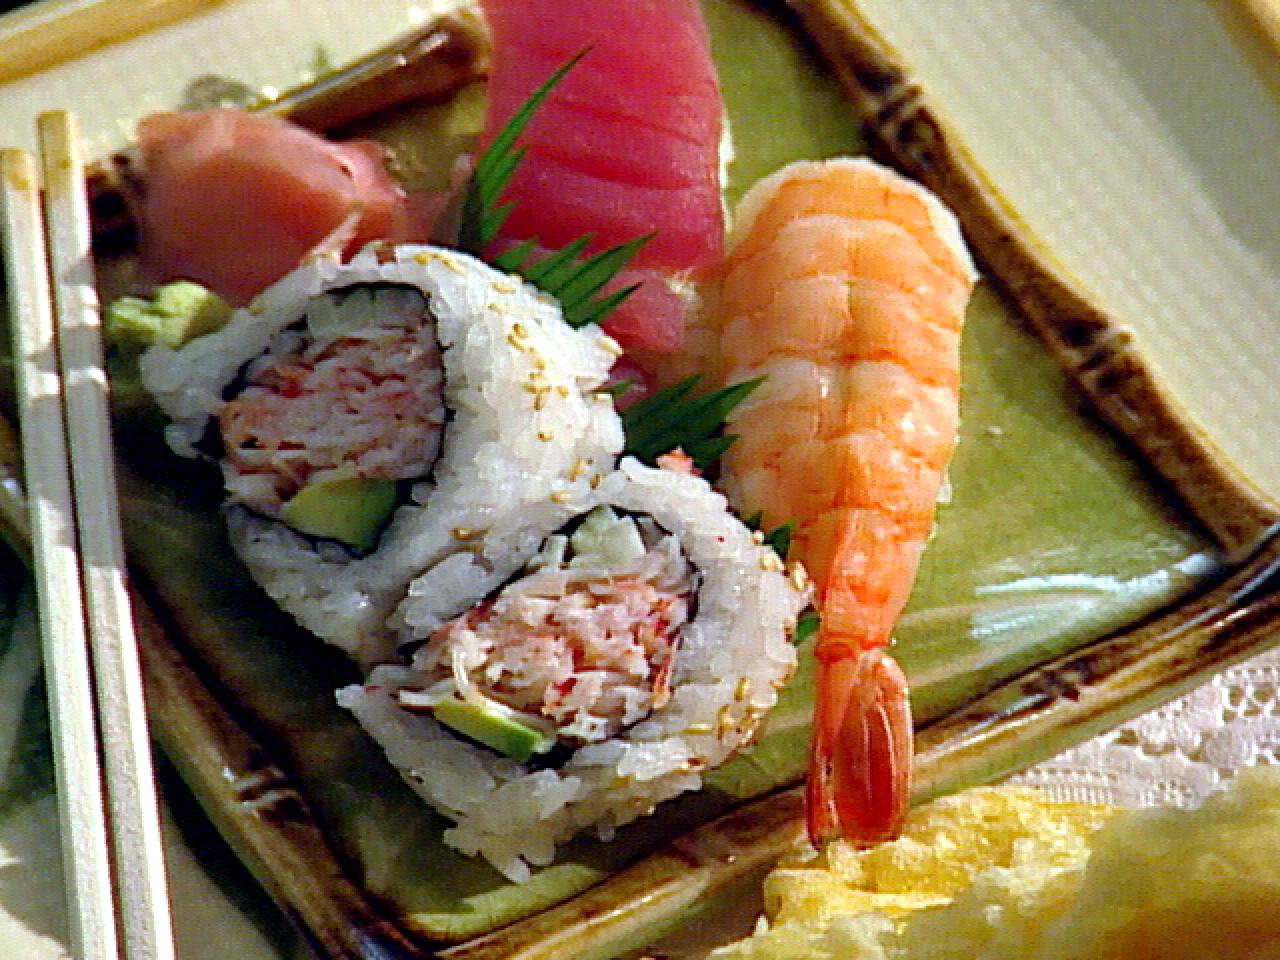 https://food.fnr.sndimg.com/content/dam/images/food/fullset/2003/10/27/0/ad1a10_sushi.jpg.rend.hgtvcom.1280.960.suffix/1371583036385.jpeg